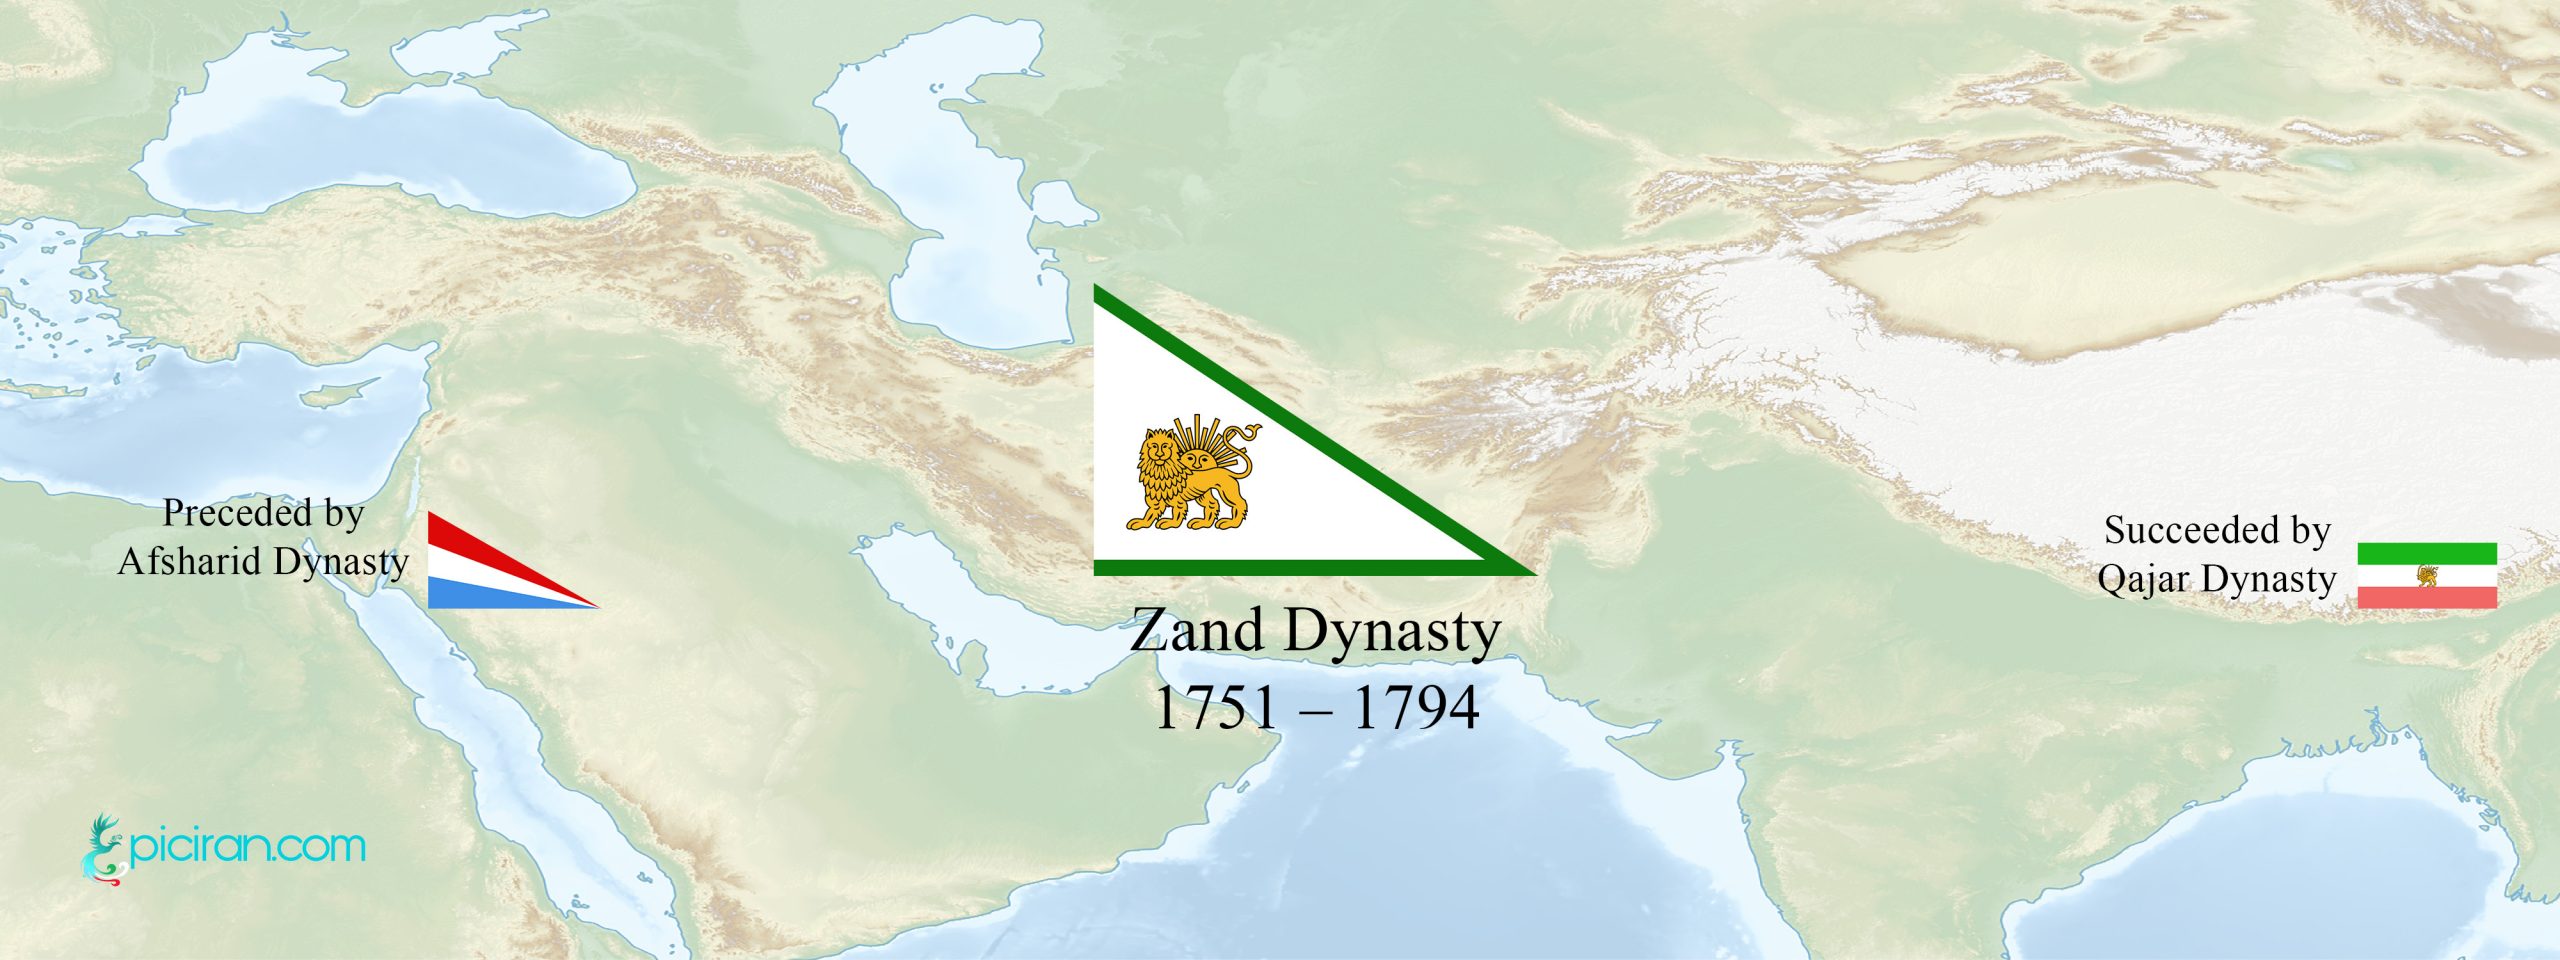 Zand Dynasty – Karim Khan Zand named himself the advocate of the people